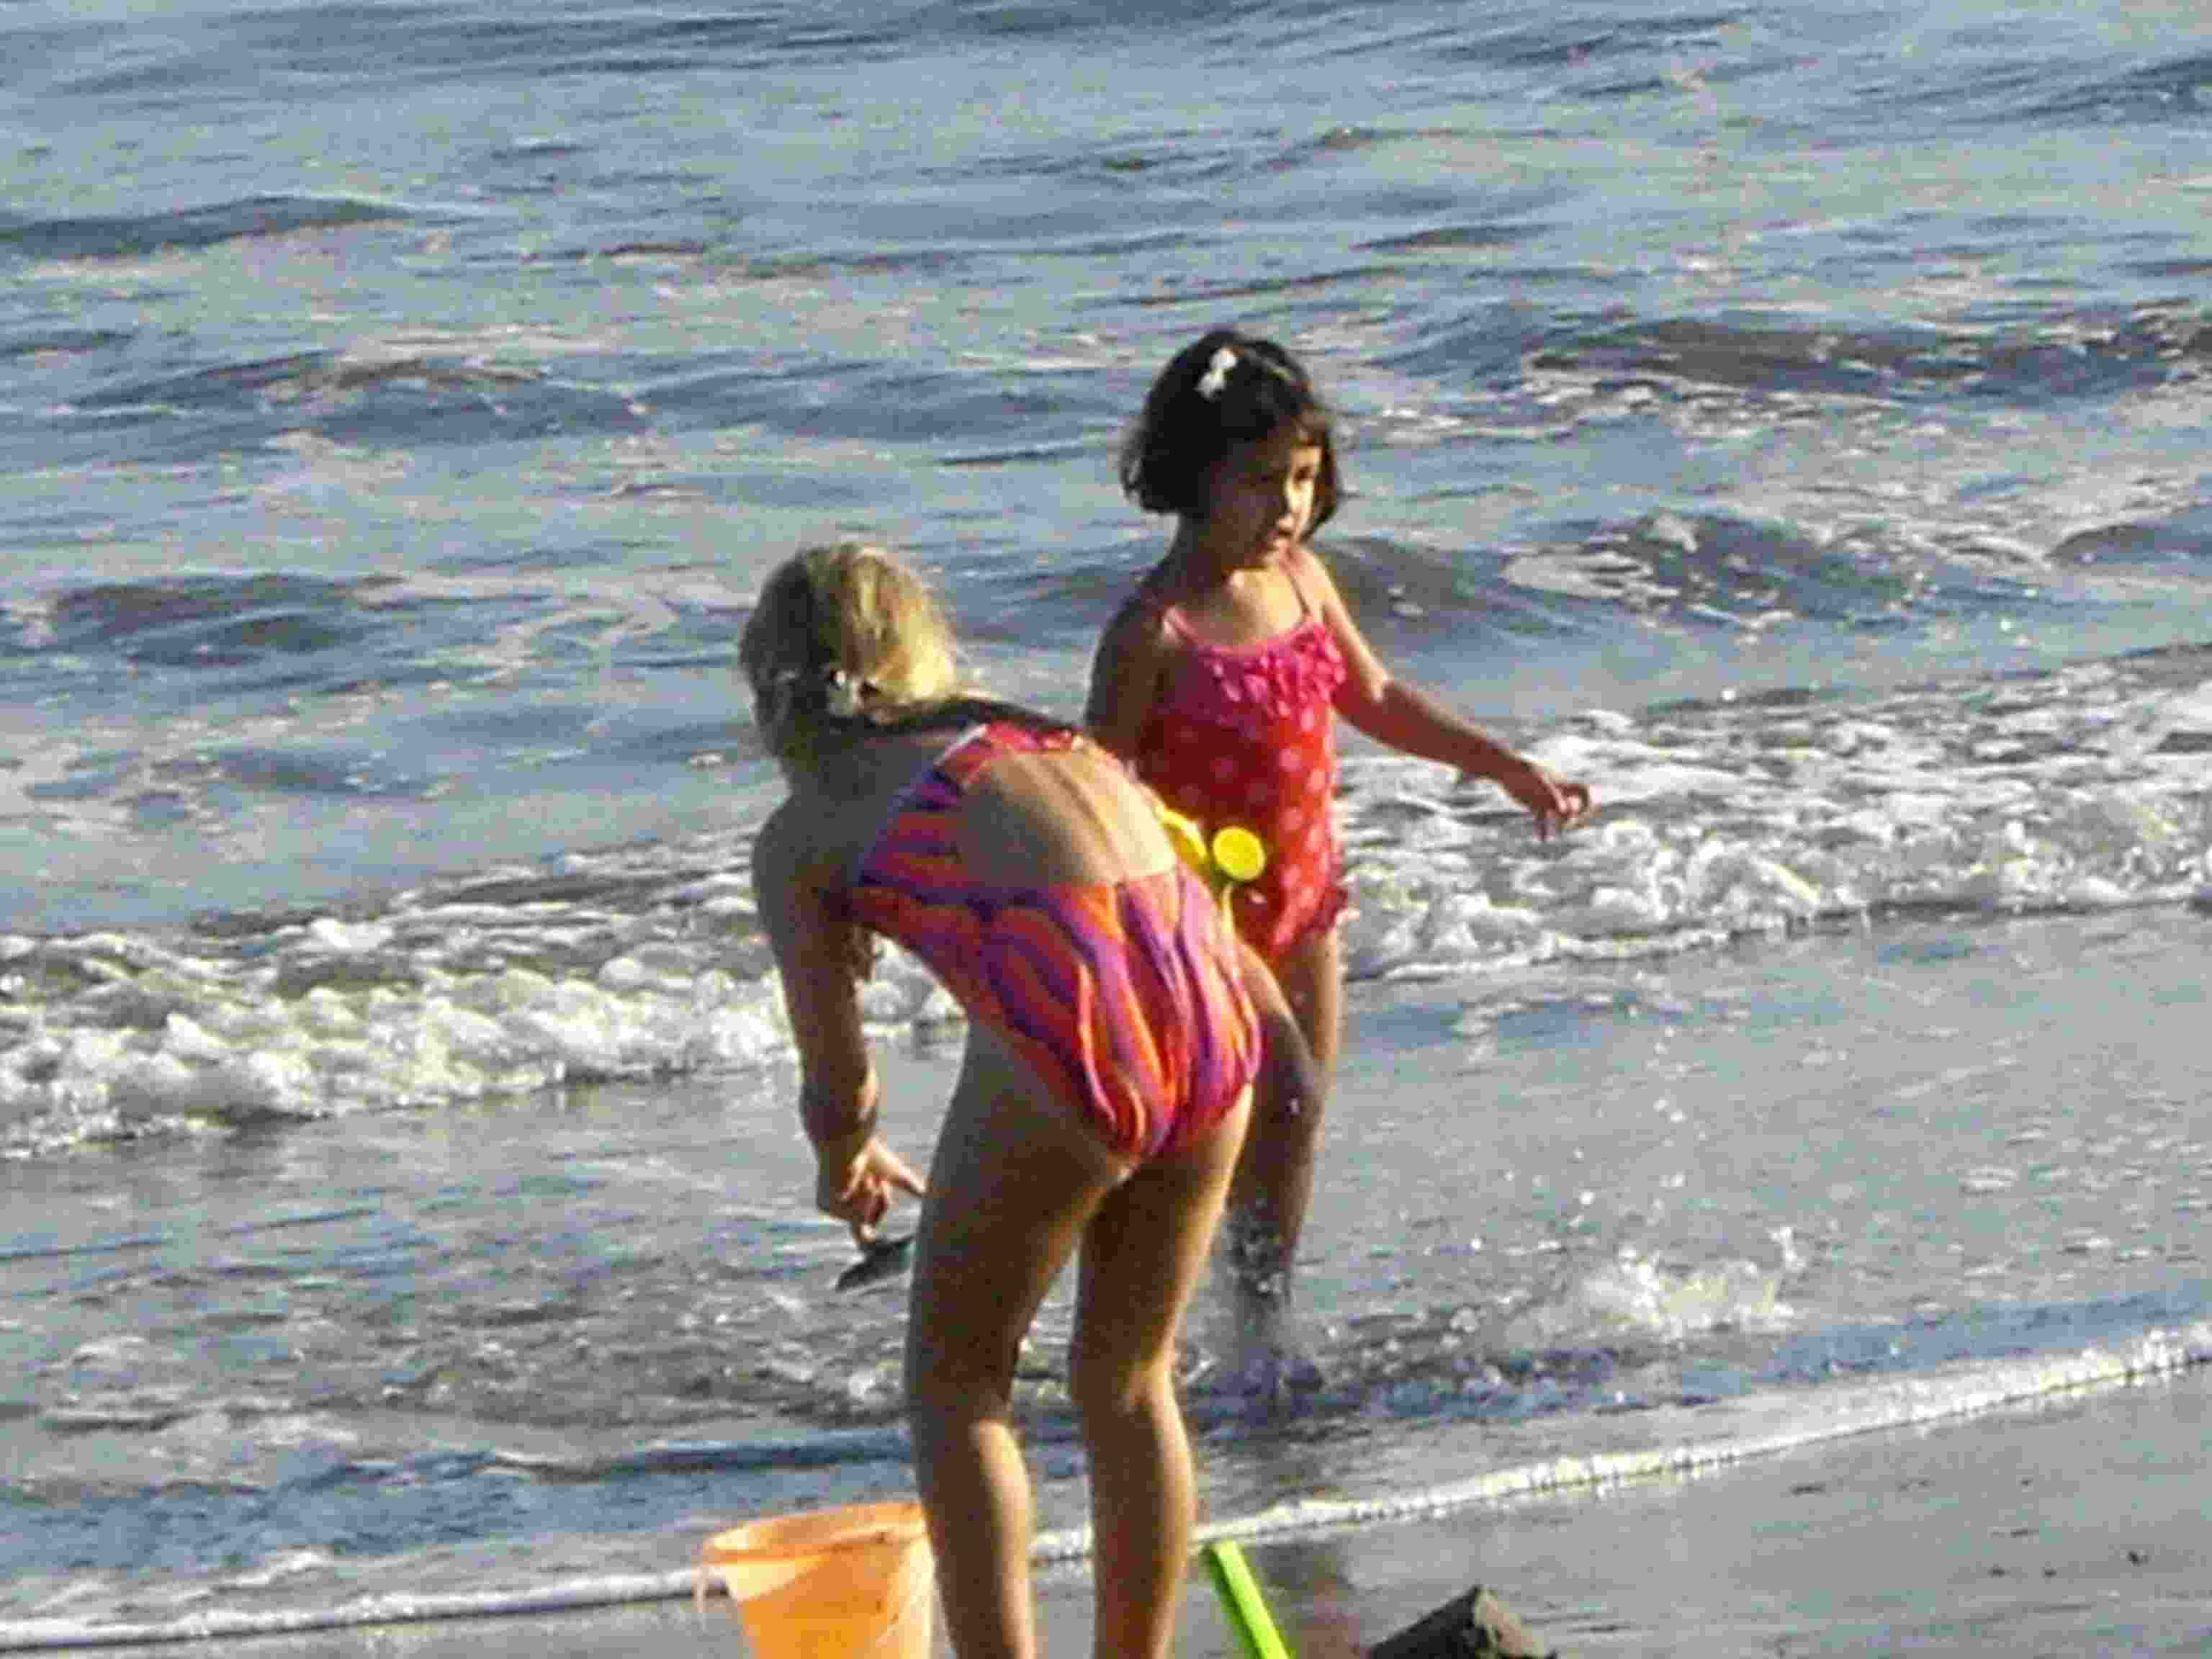 Hope playing with new friend, Santa Barbara, Aug 2012